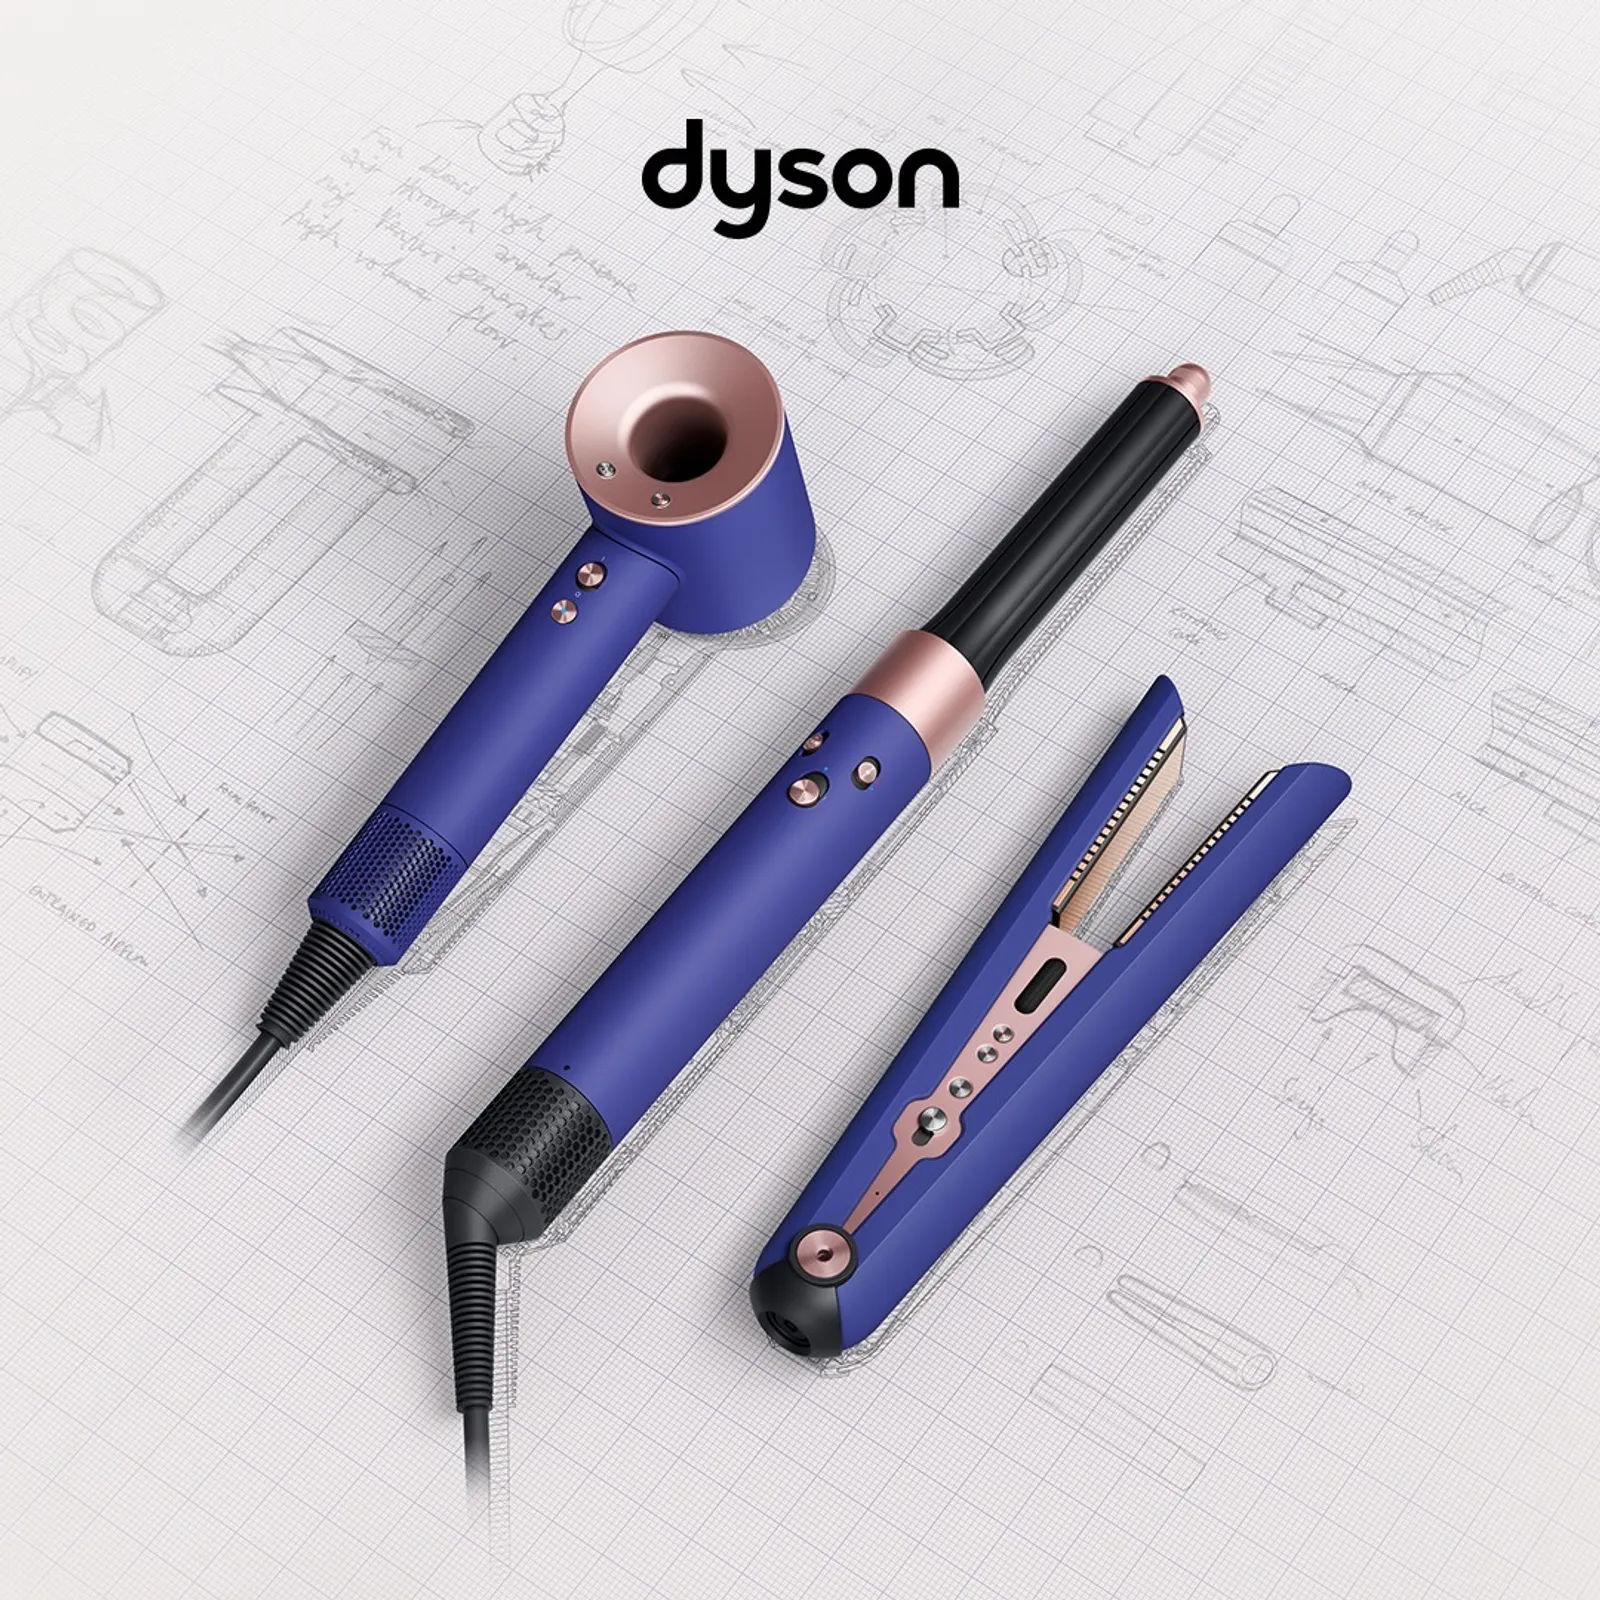 Sambut Akhir Tahun, Dyson Luncurkan Warna Limited Edition 